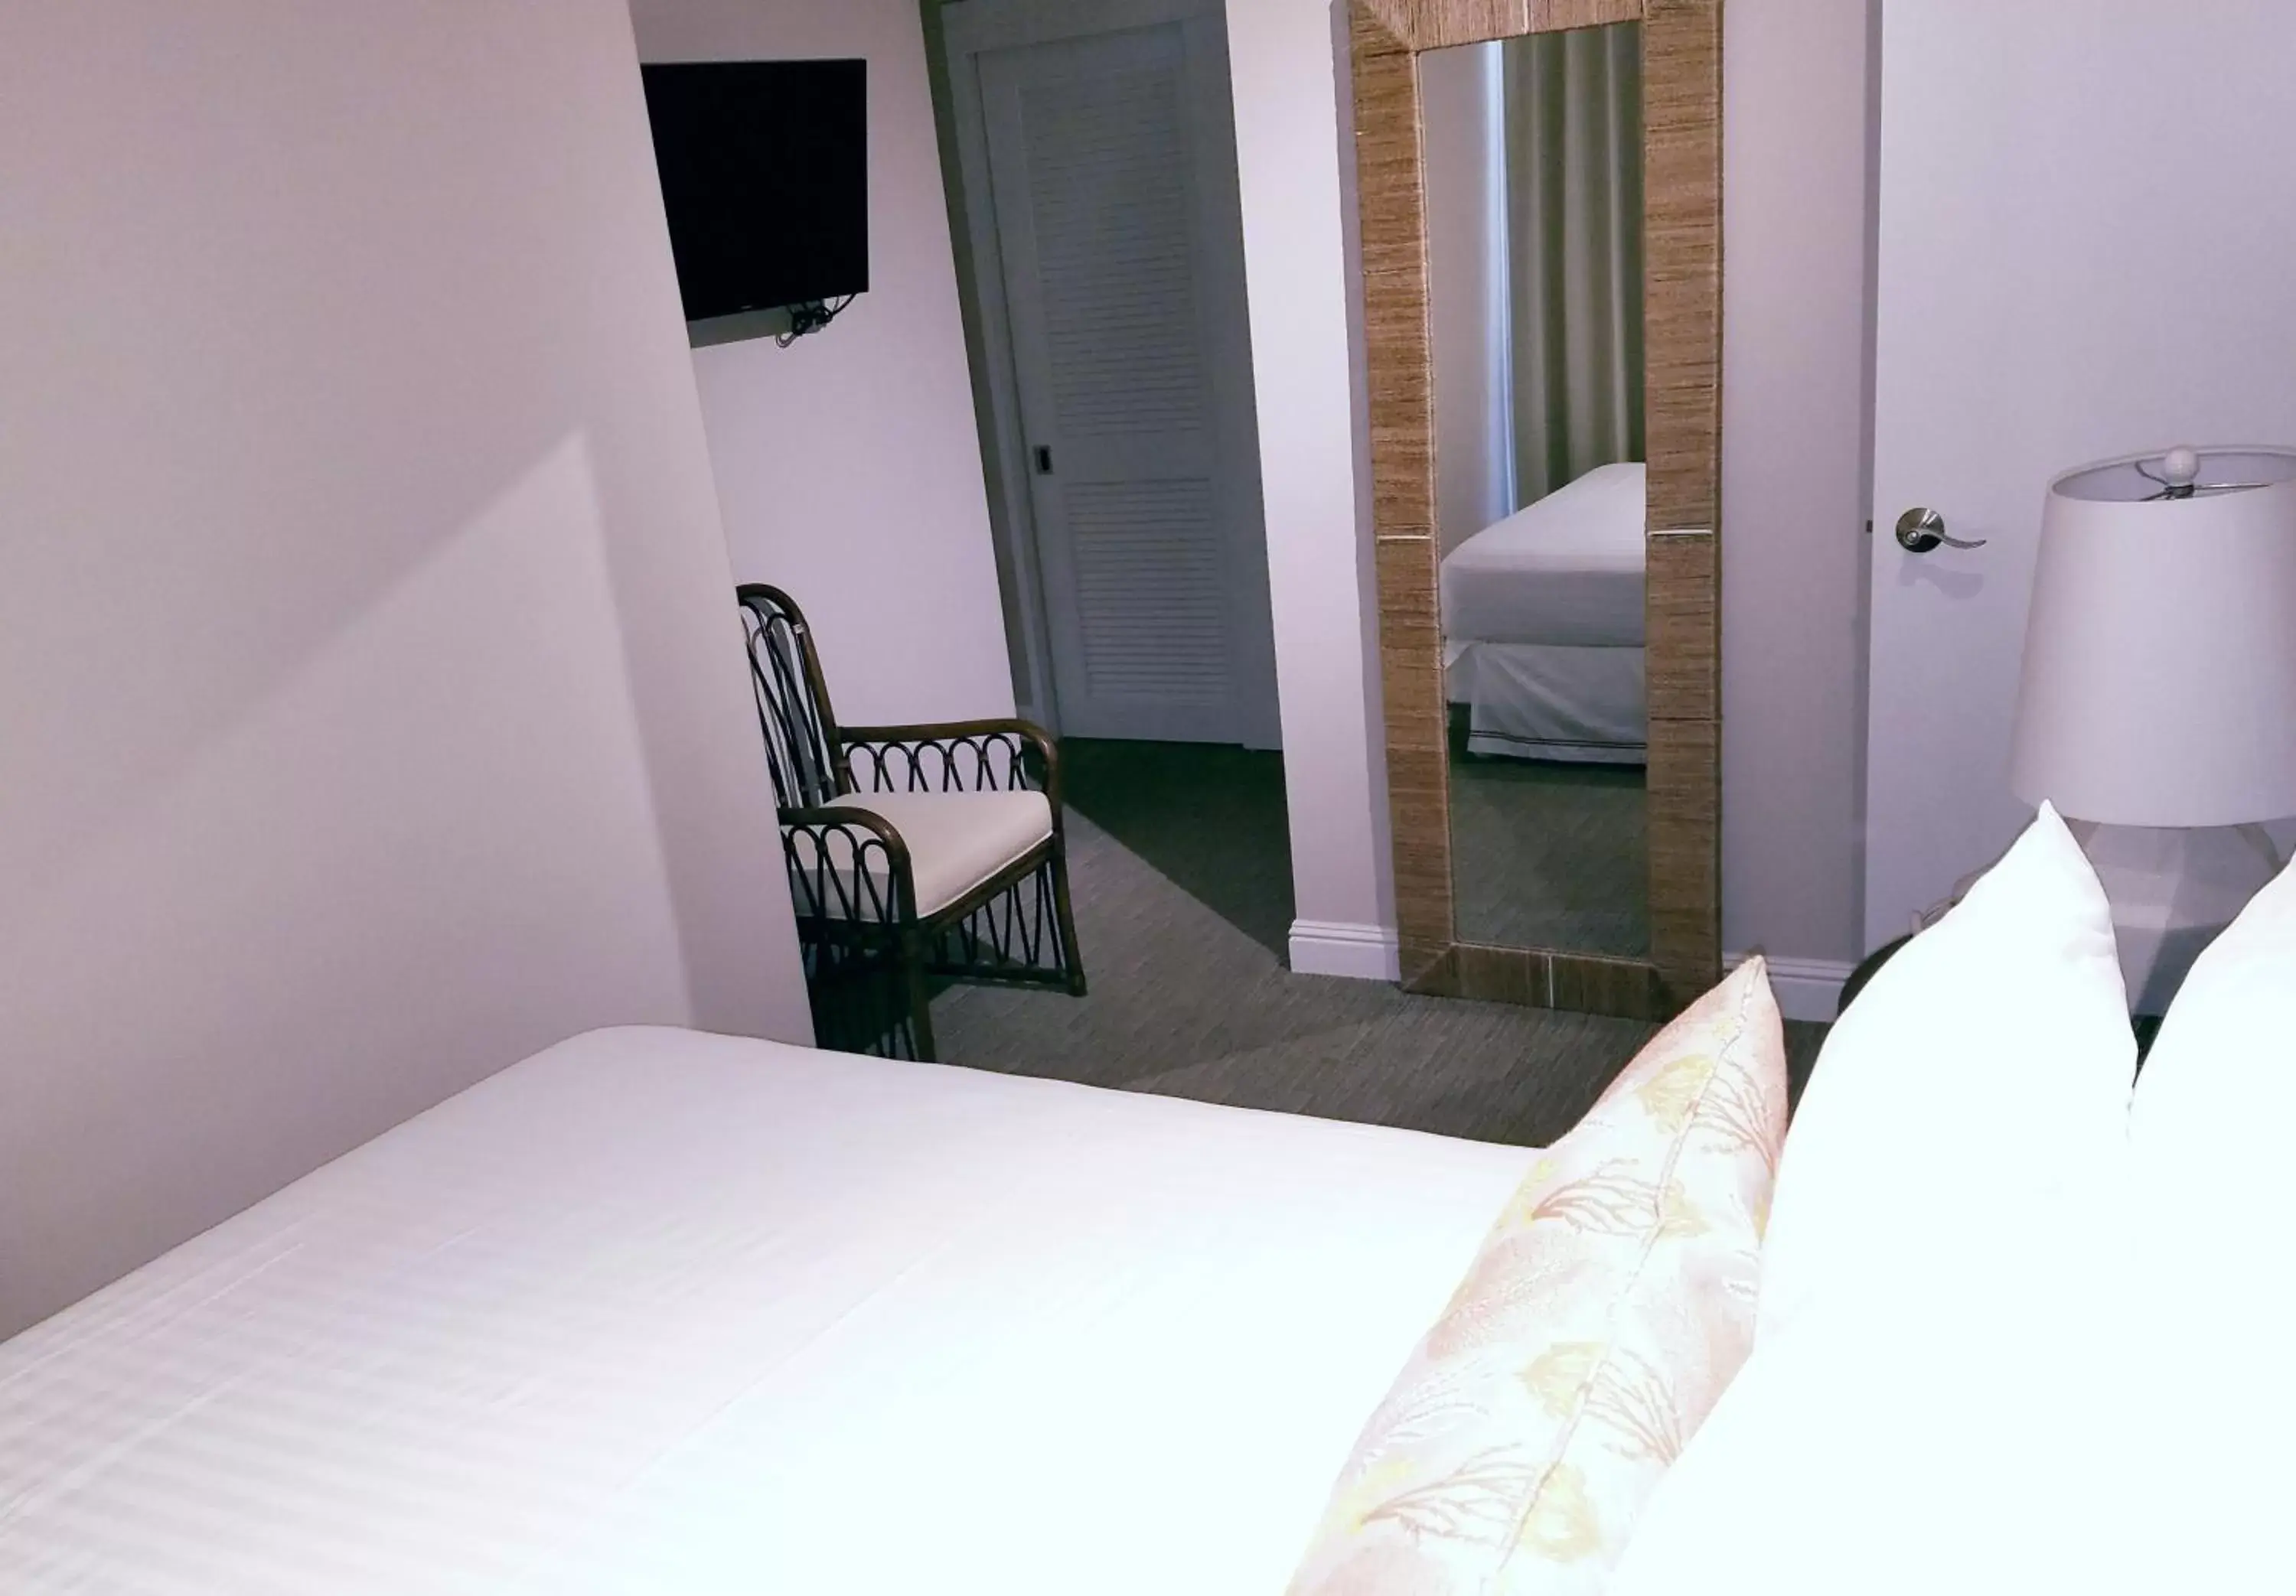 Bed, Room Photo in Imperial Hawaii Resort